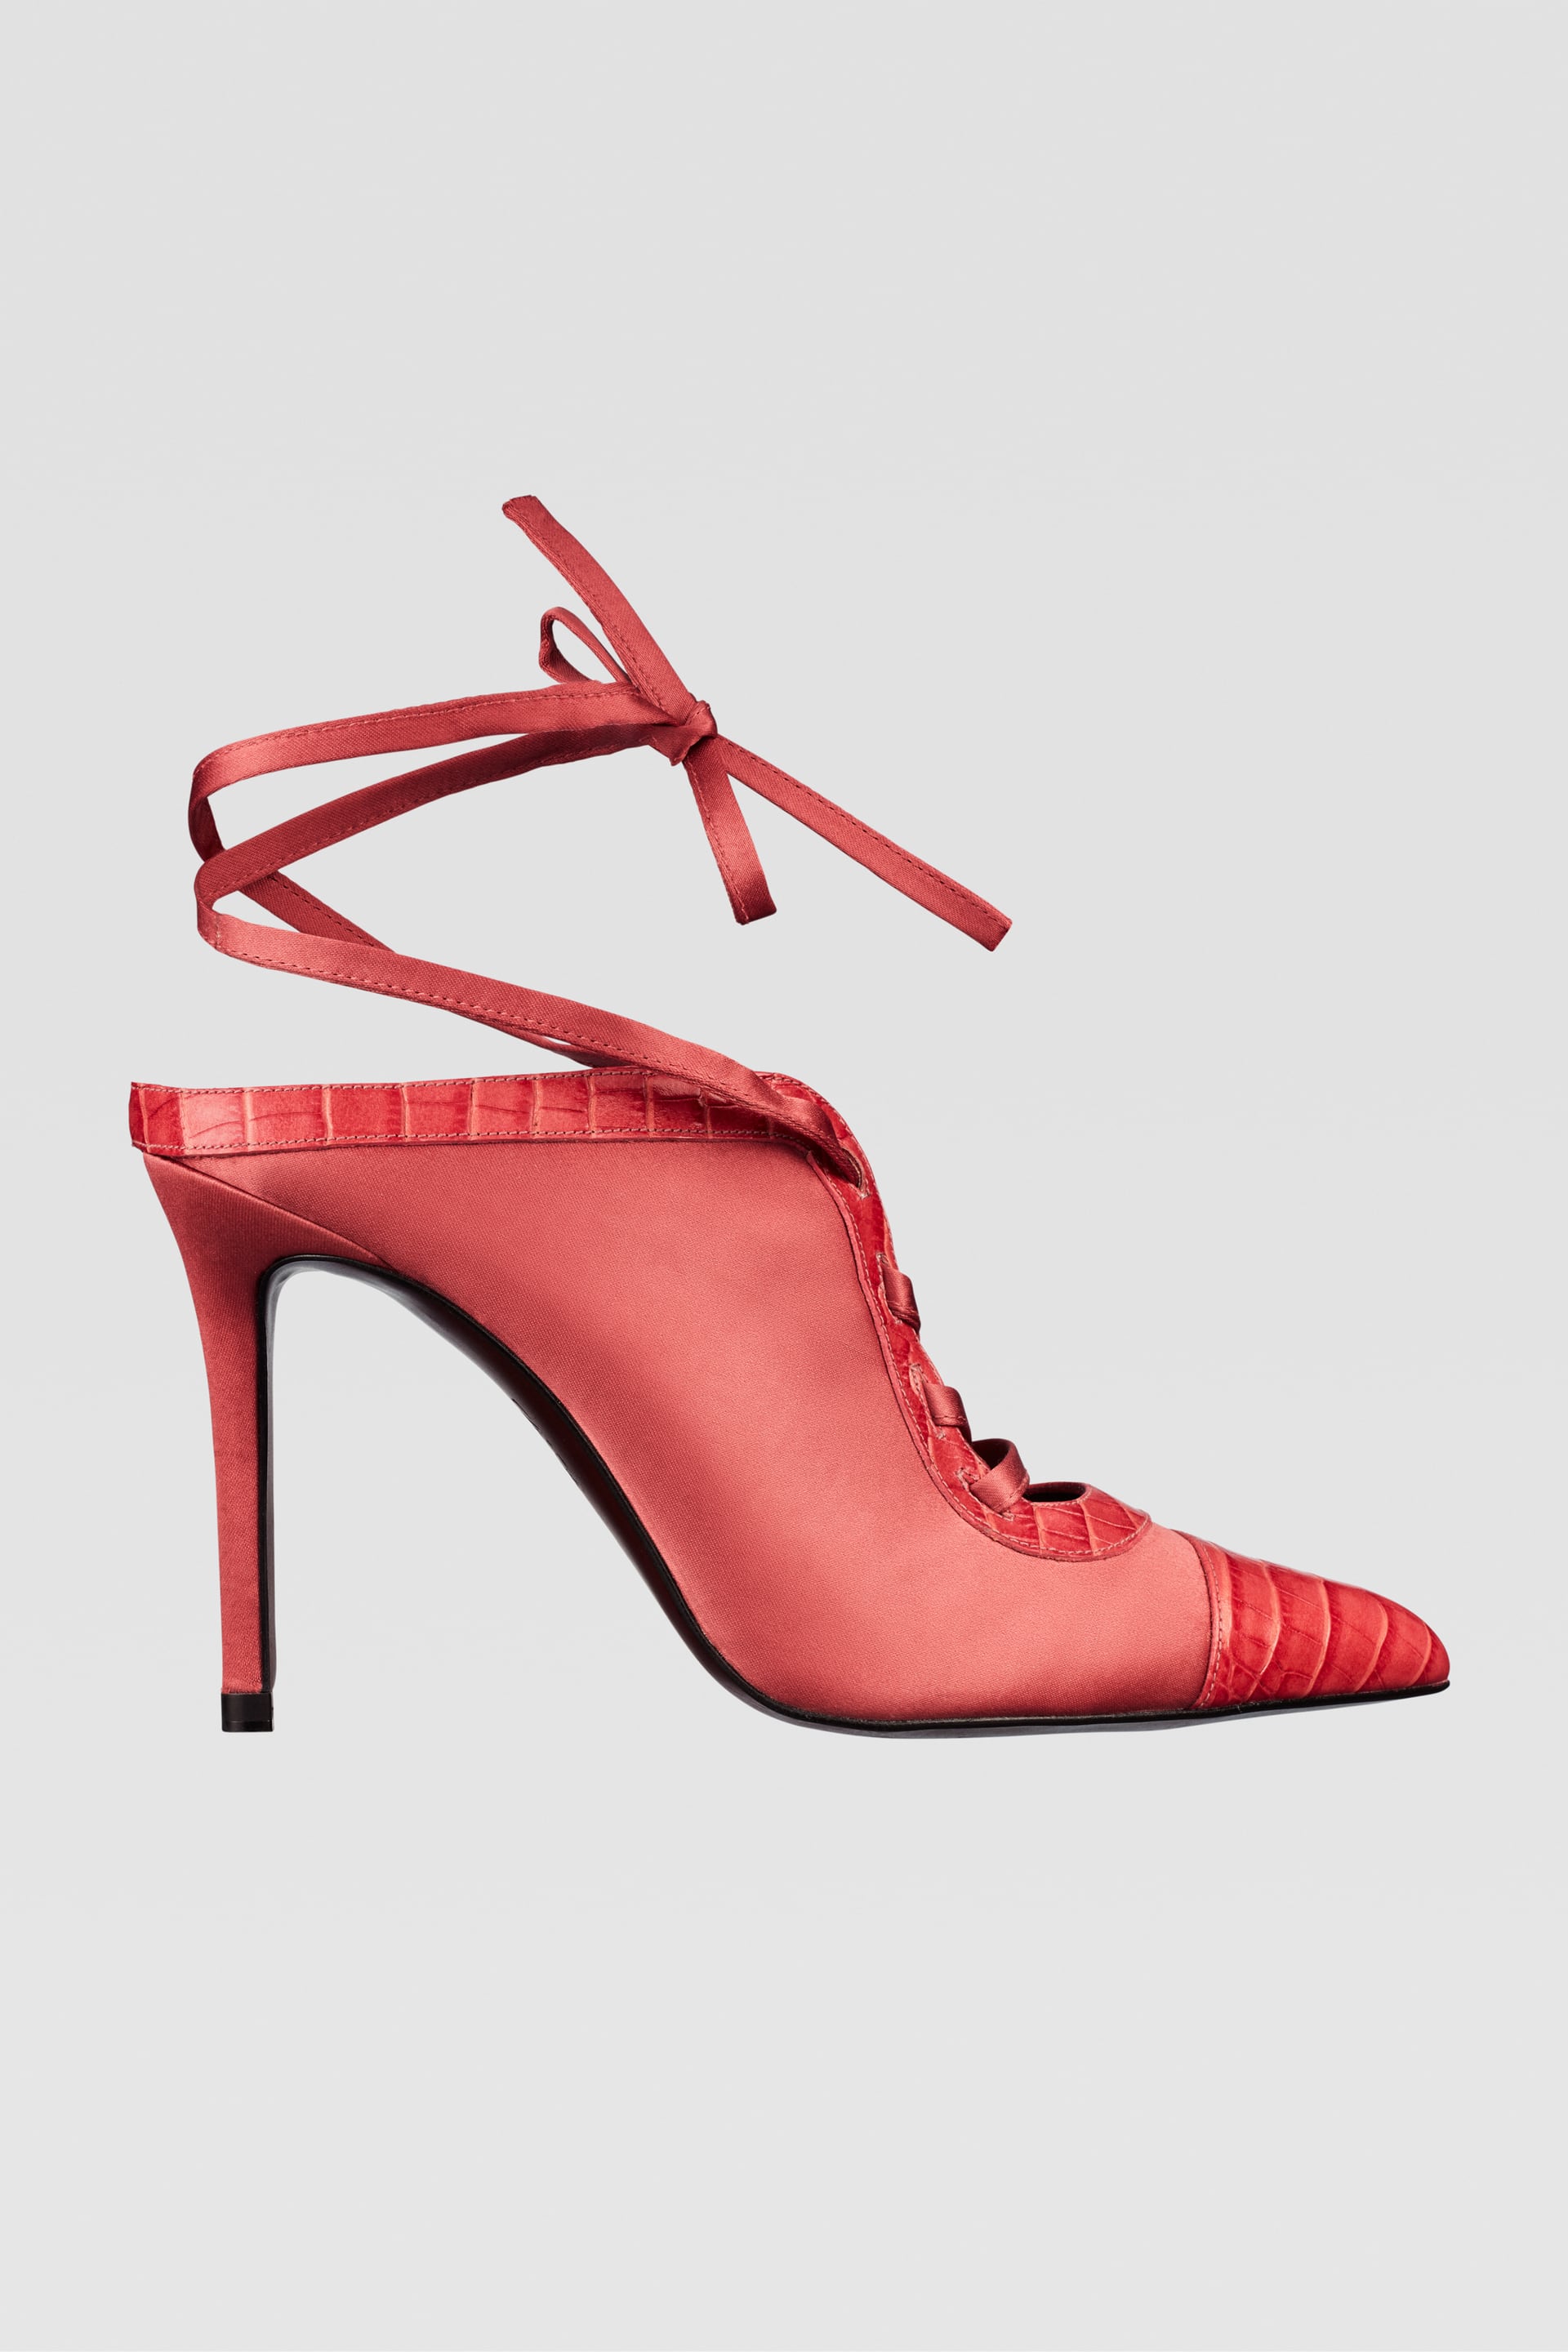 ejendom Association have Zara Campaign + Tied High Heeled Shoes